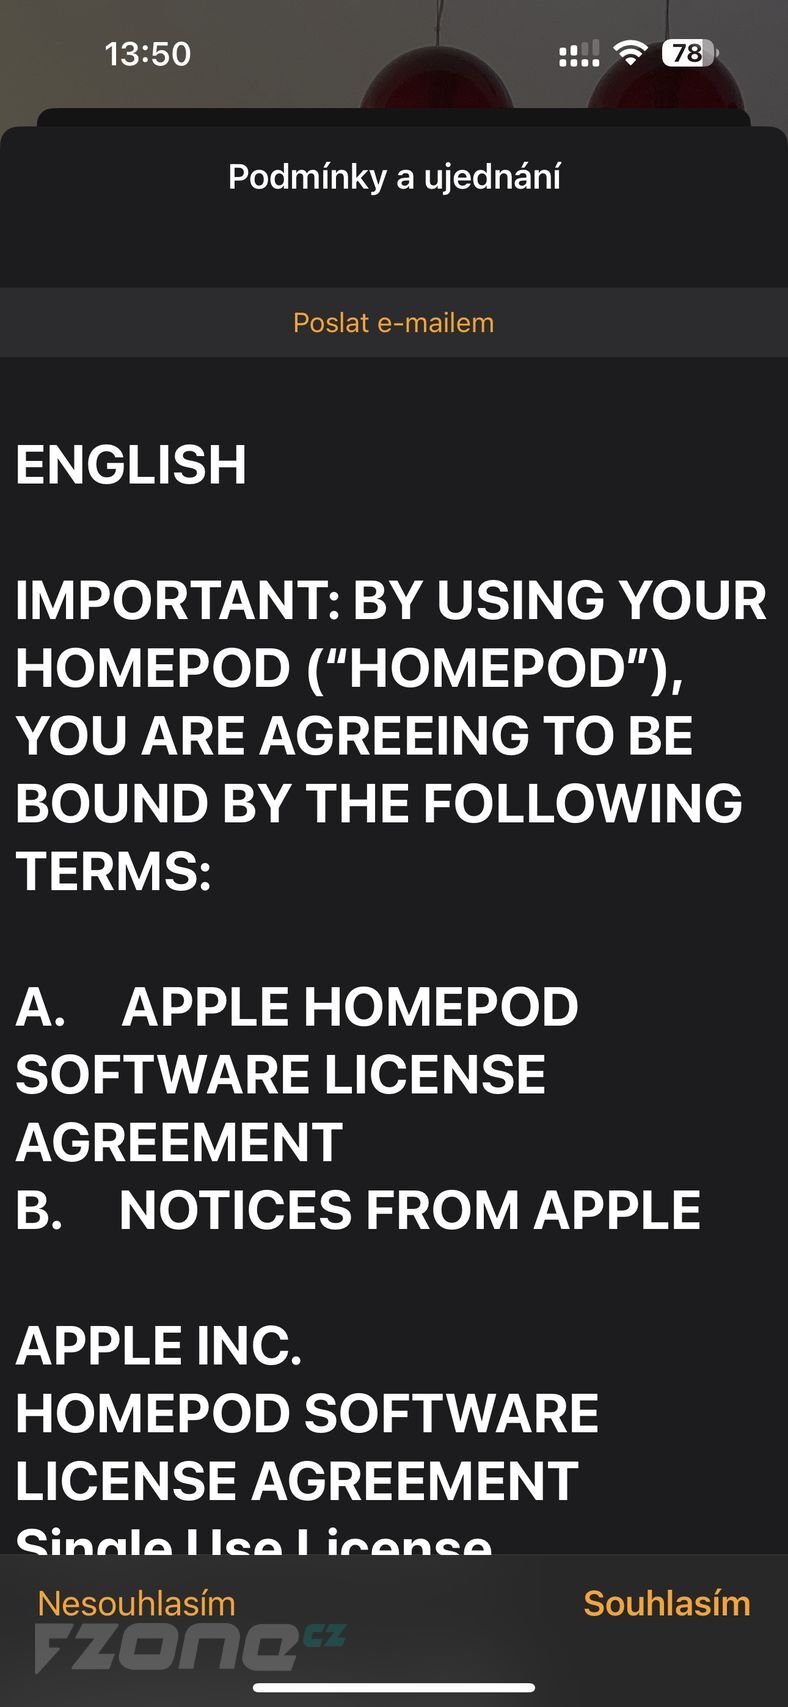 Apple HomePod mini - aktualizace iOS 16.3